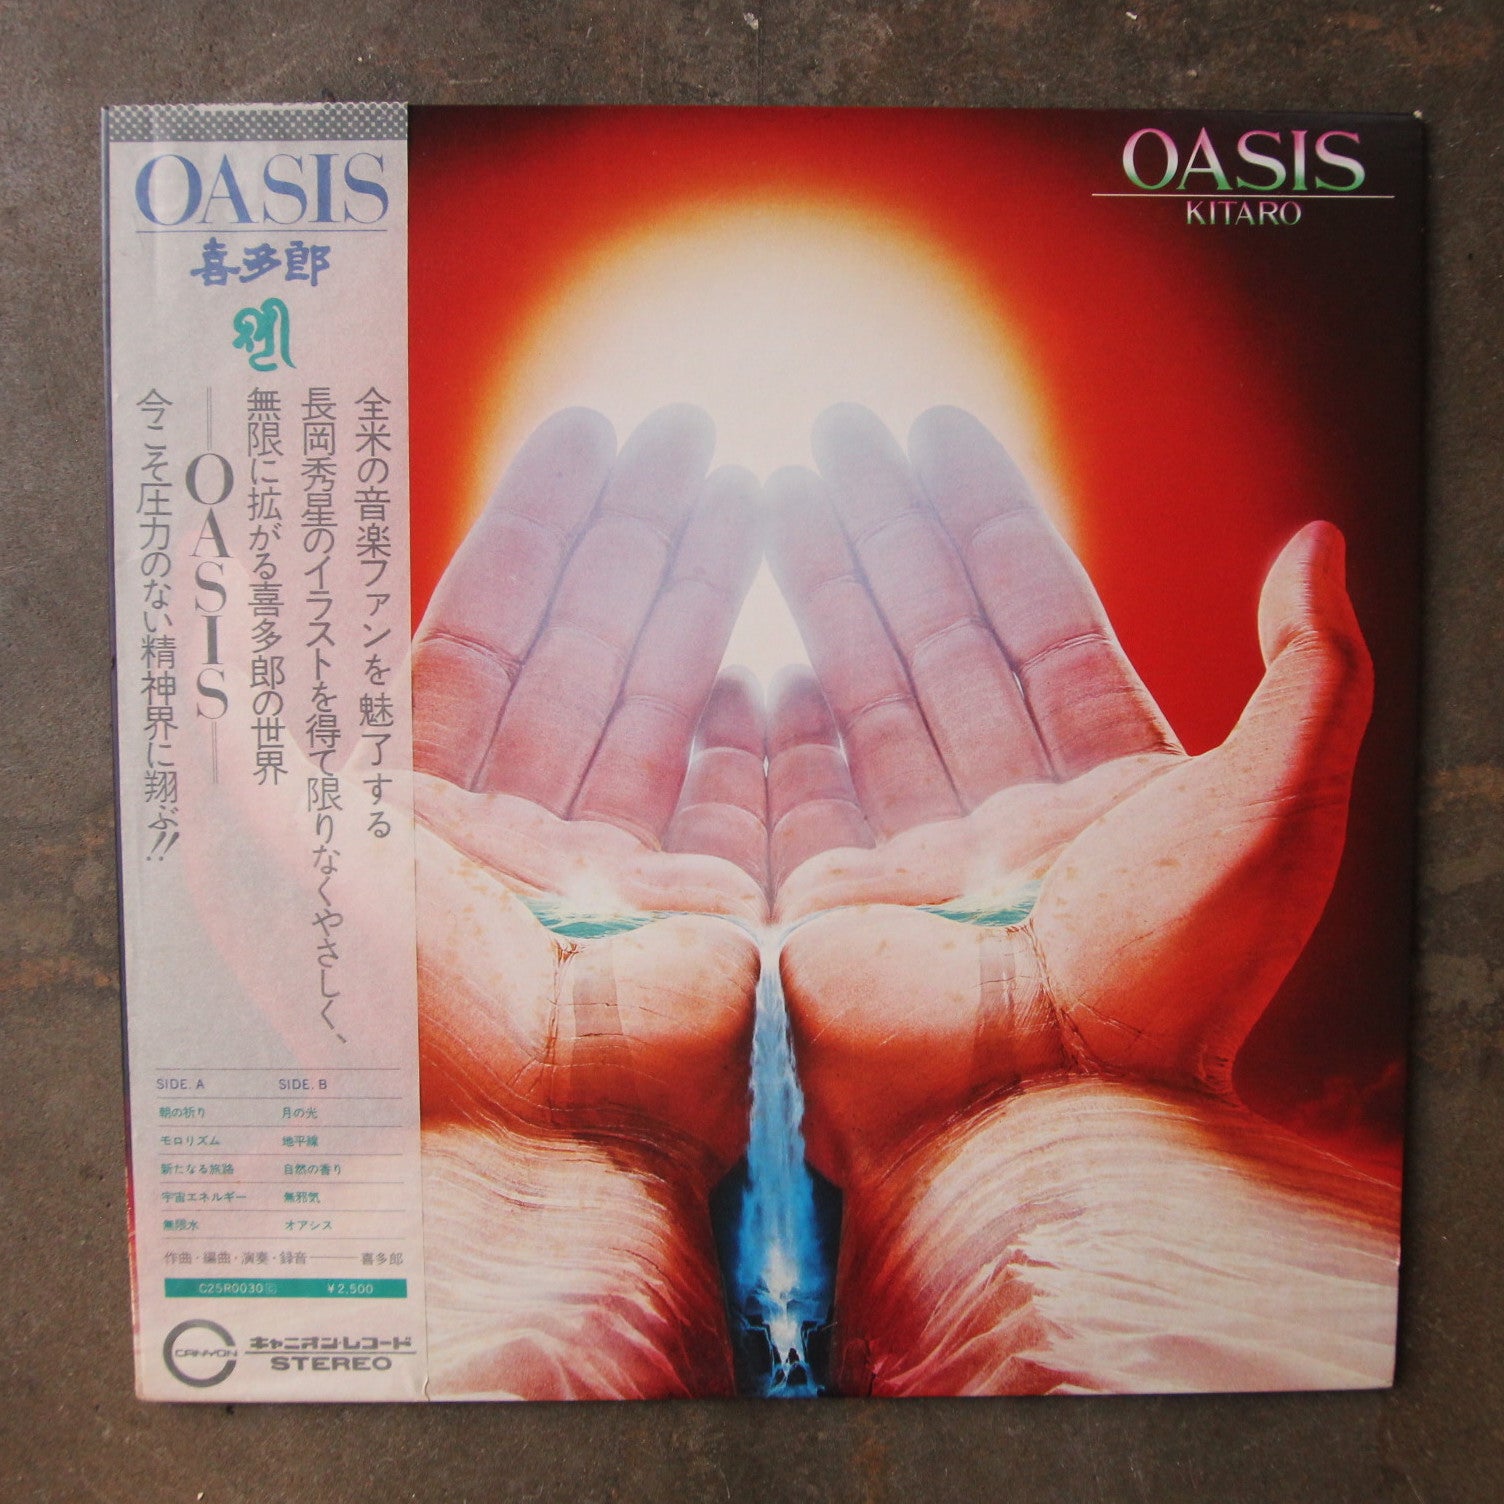 Kitaro u003d 喜多郎* u200e– Oasis